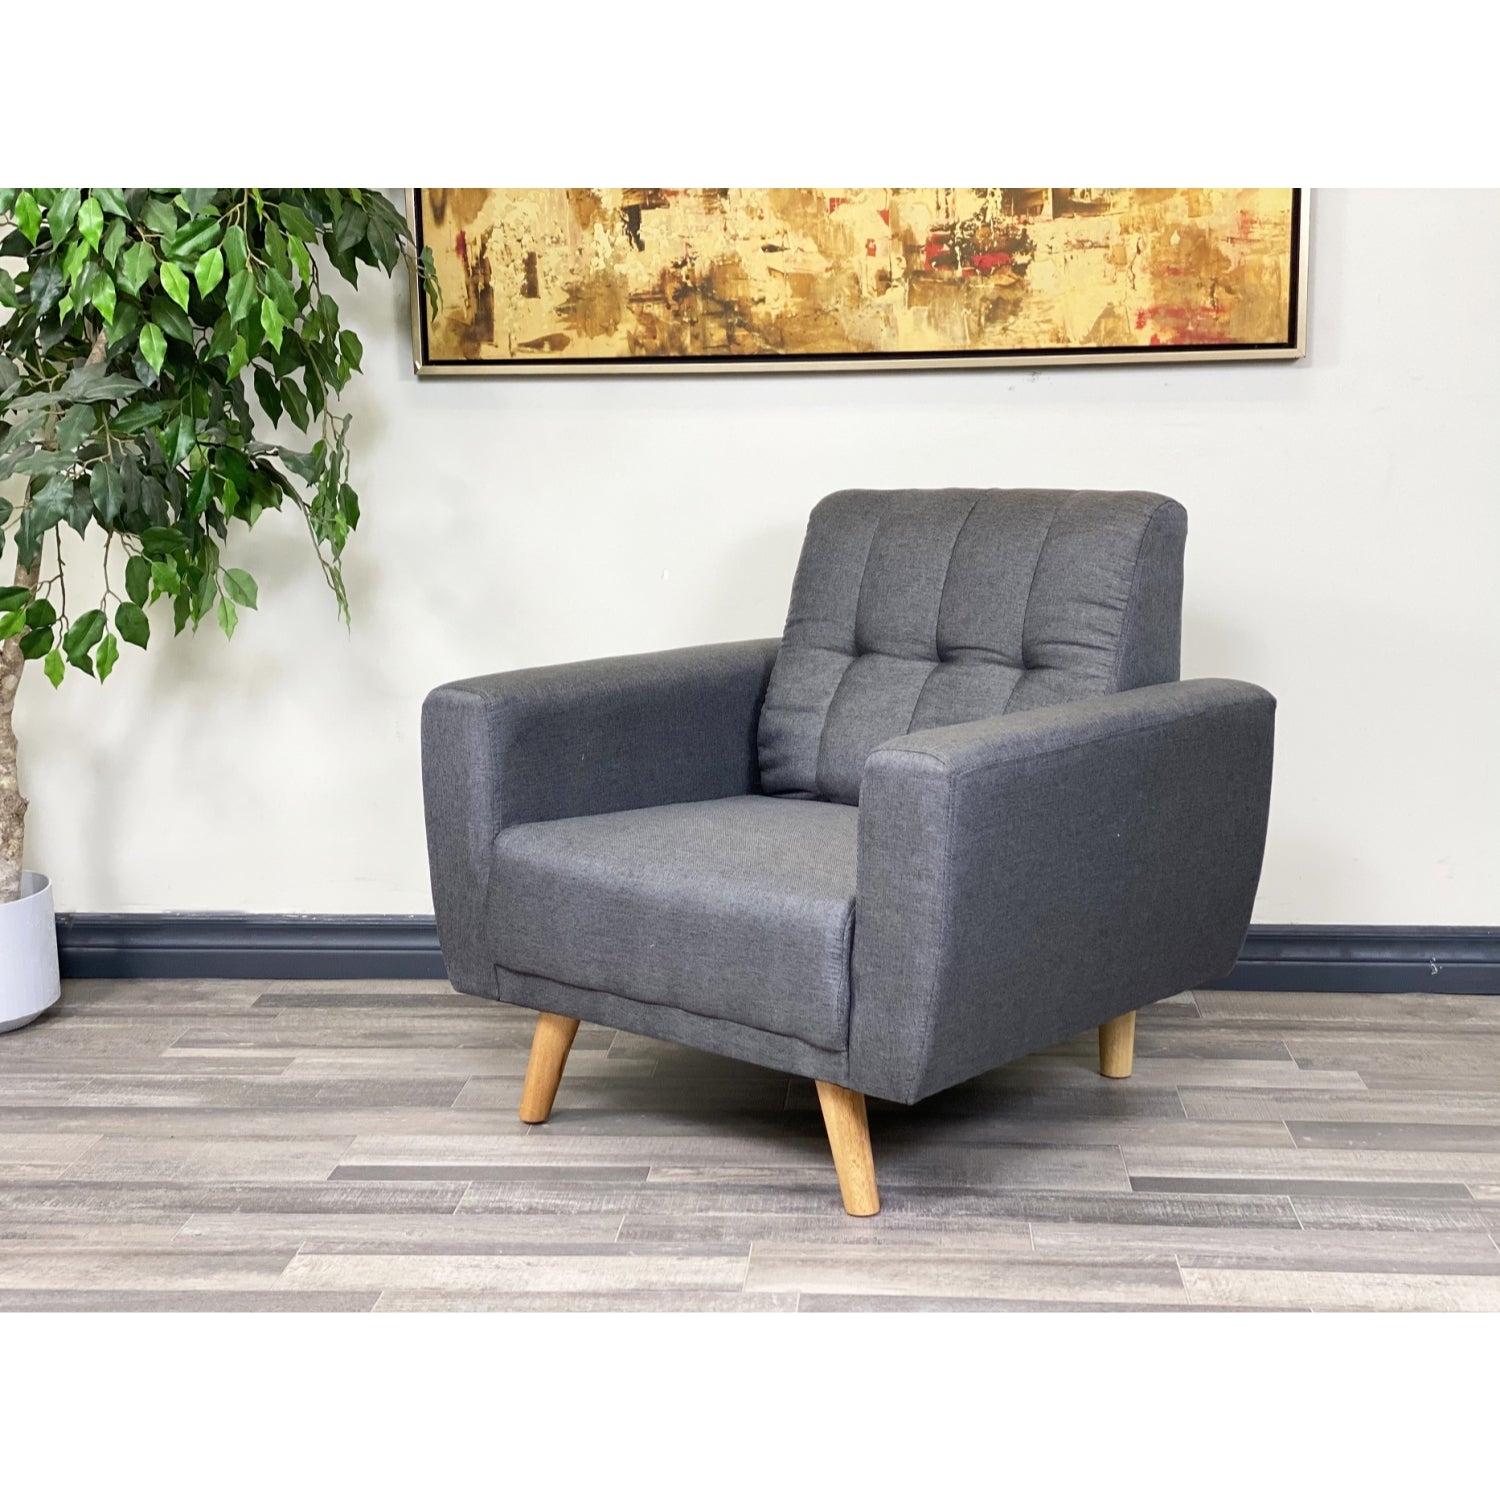 ViscoLogic MOCA Contemporary New Mid-Century Tufted Style Fabric Upholstered Modern Living Room Sofa (Dark Grey)